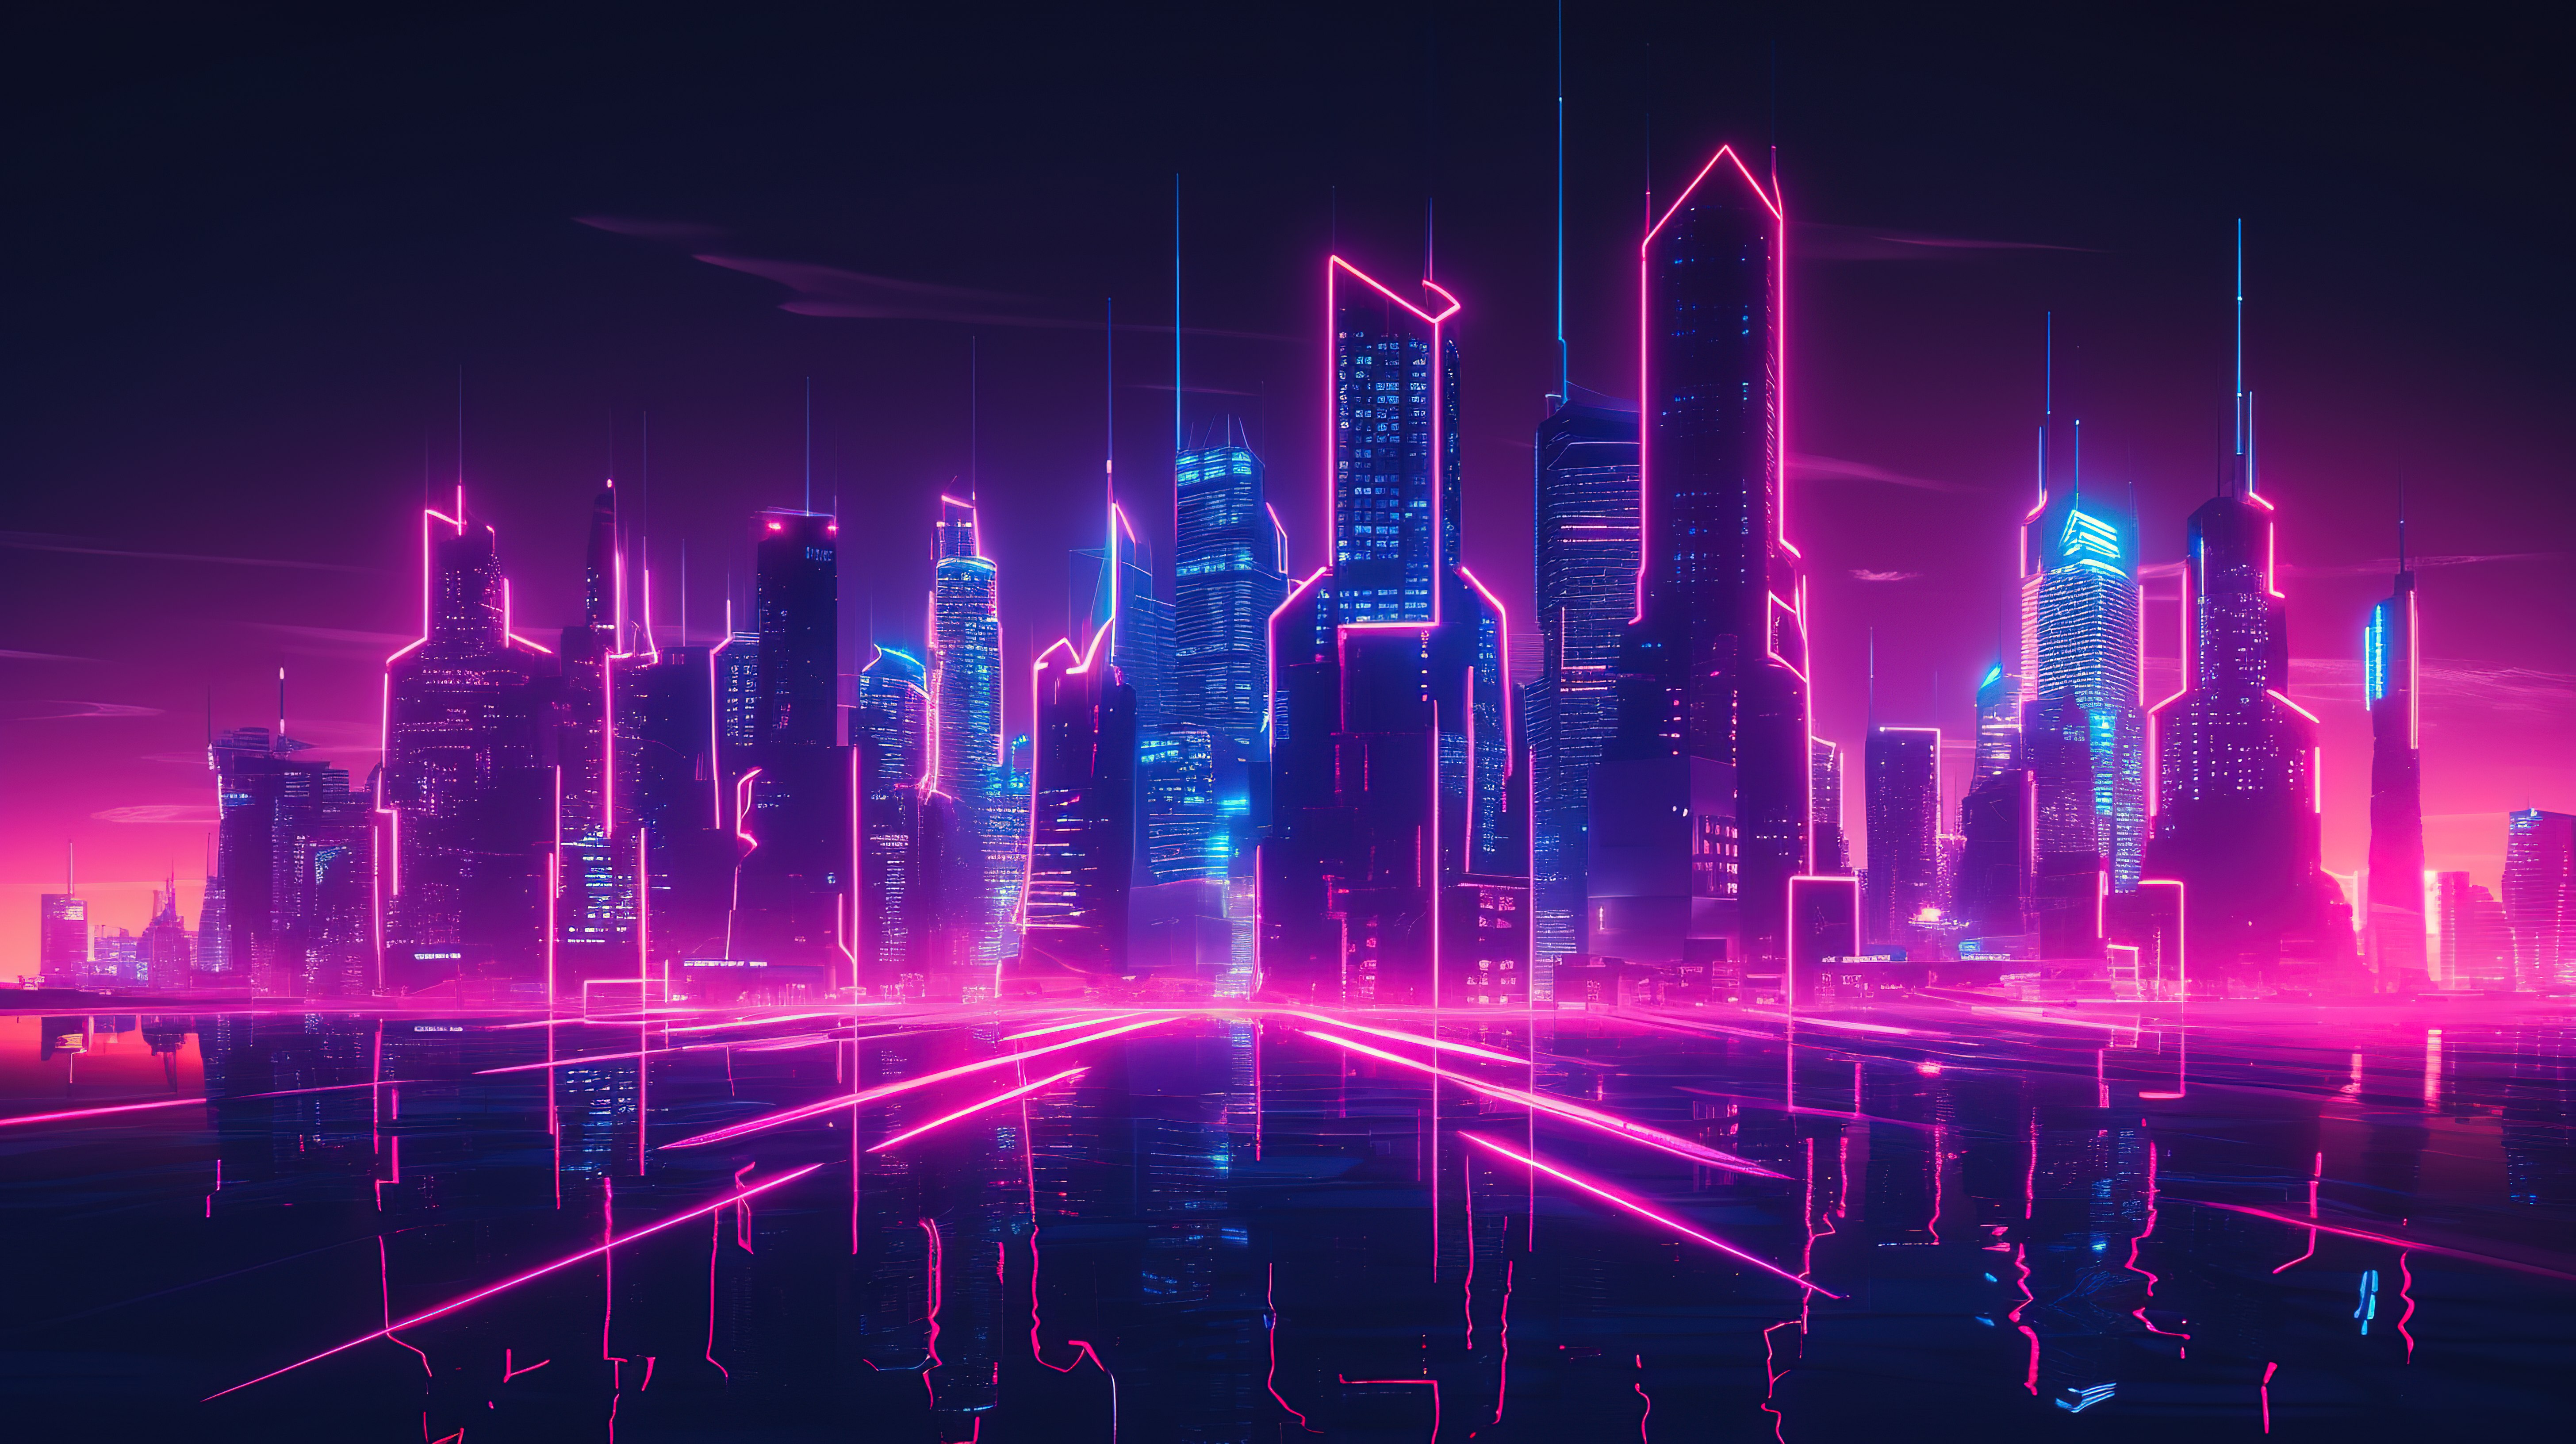 3D 合成波时代的发光赛博朋克大都市，霓虹灯点亮的摩天大楼和未来网格景观图片